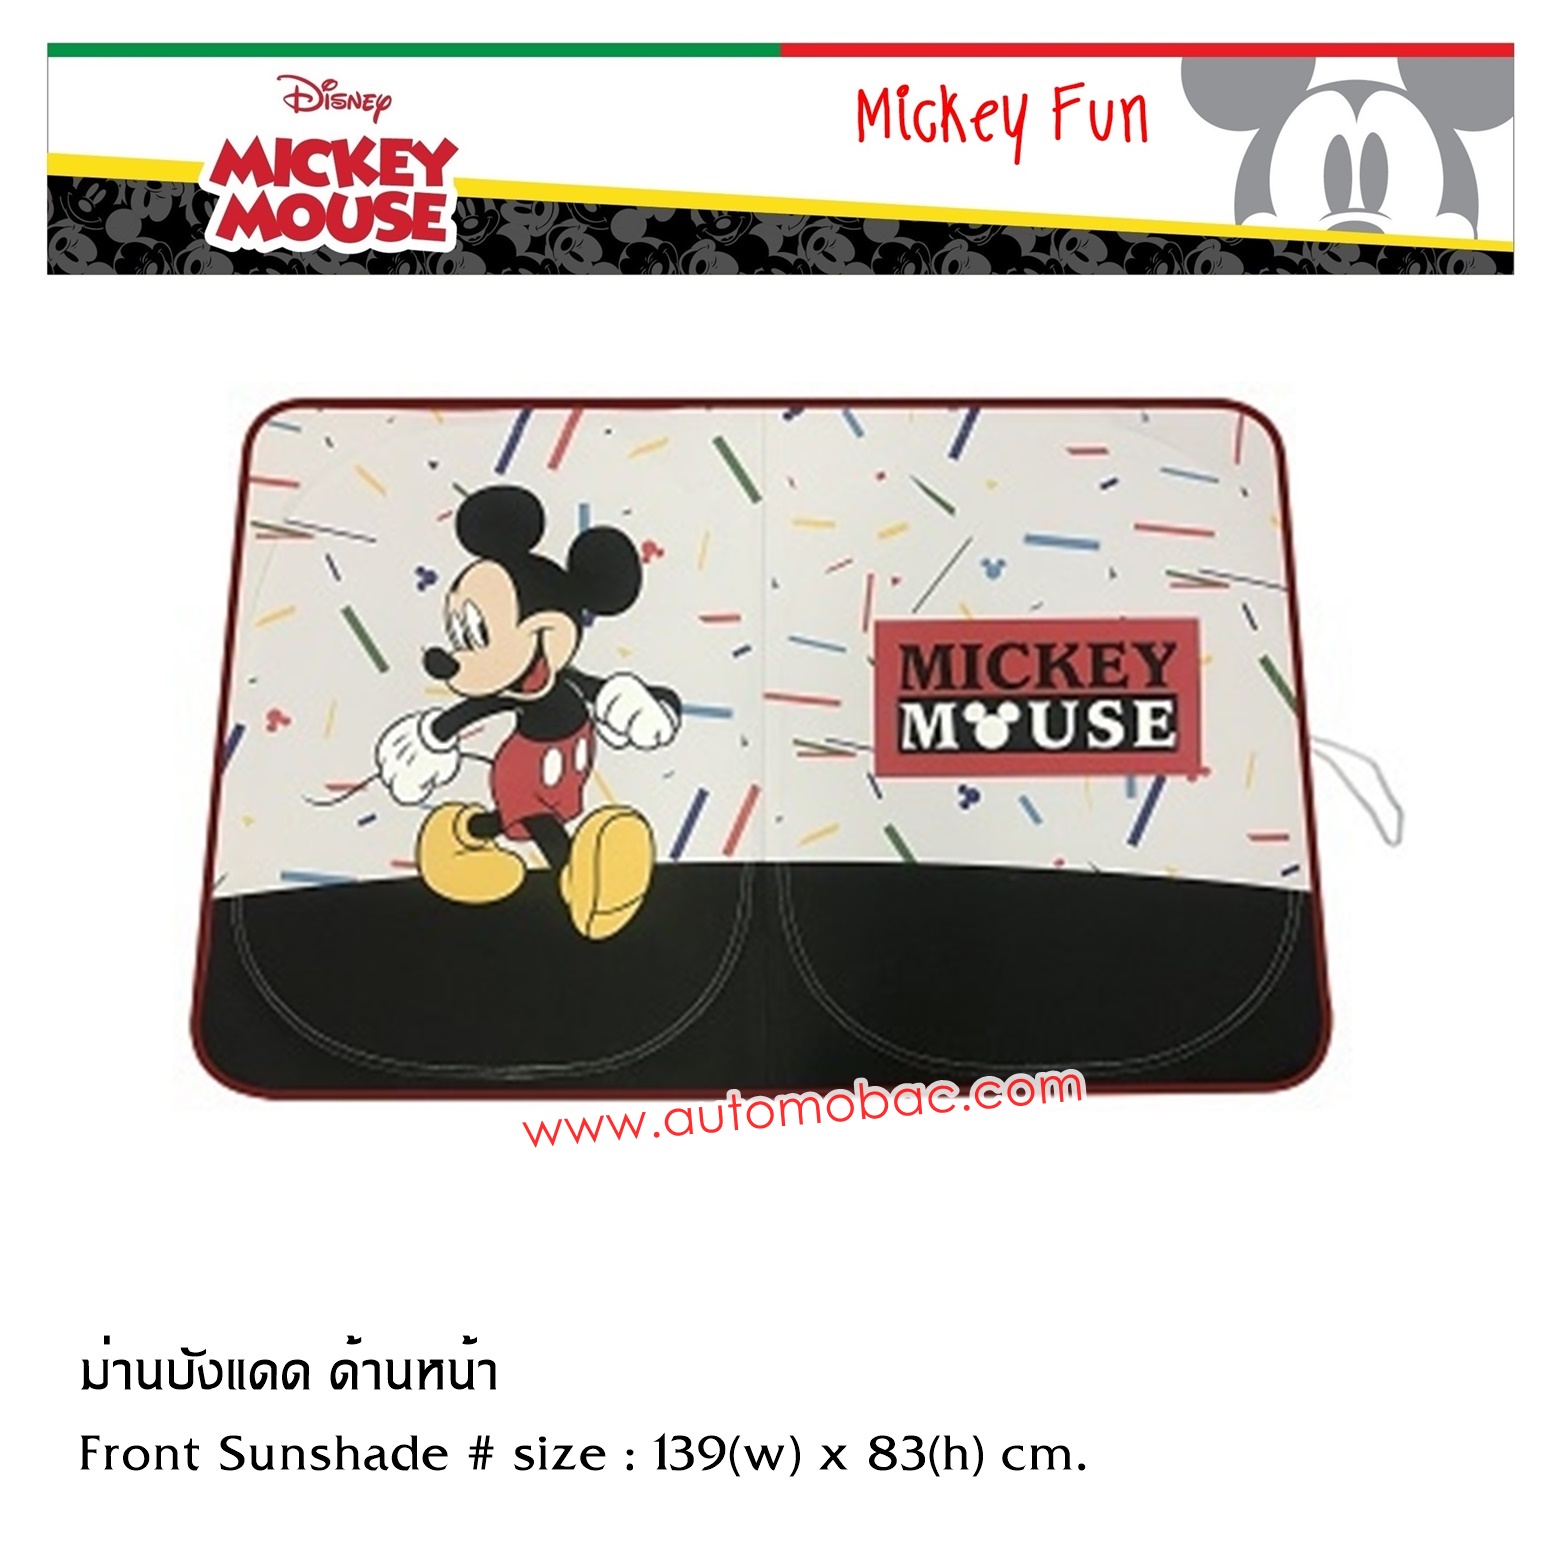 Mickey Mouse FUN ม่านบังแดด ด้านหน้า ป้องกัน UV และความร้อน งานลิขสิทธิ์แท้ ใช้ได้กับรถทุกรุ่น